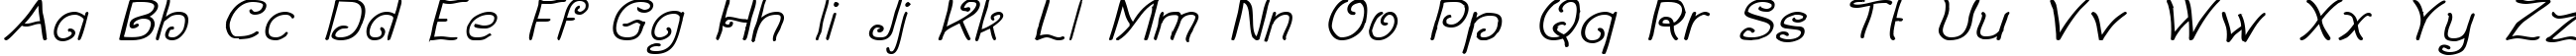 Пример написания английского алфавита шрифтом Curlmudgeon Italic